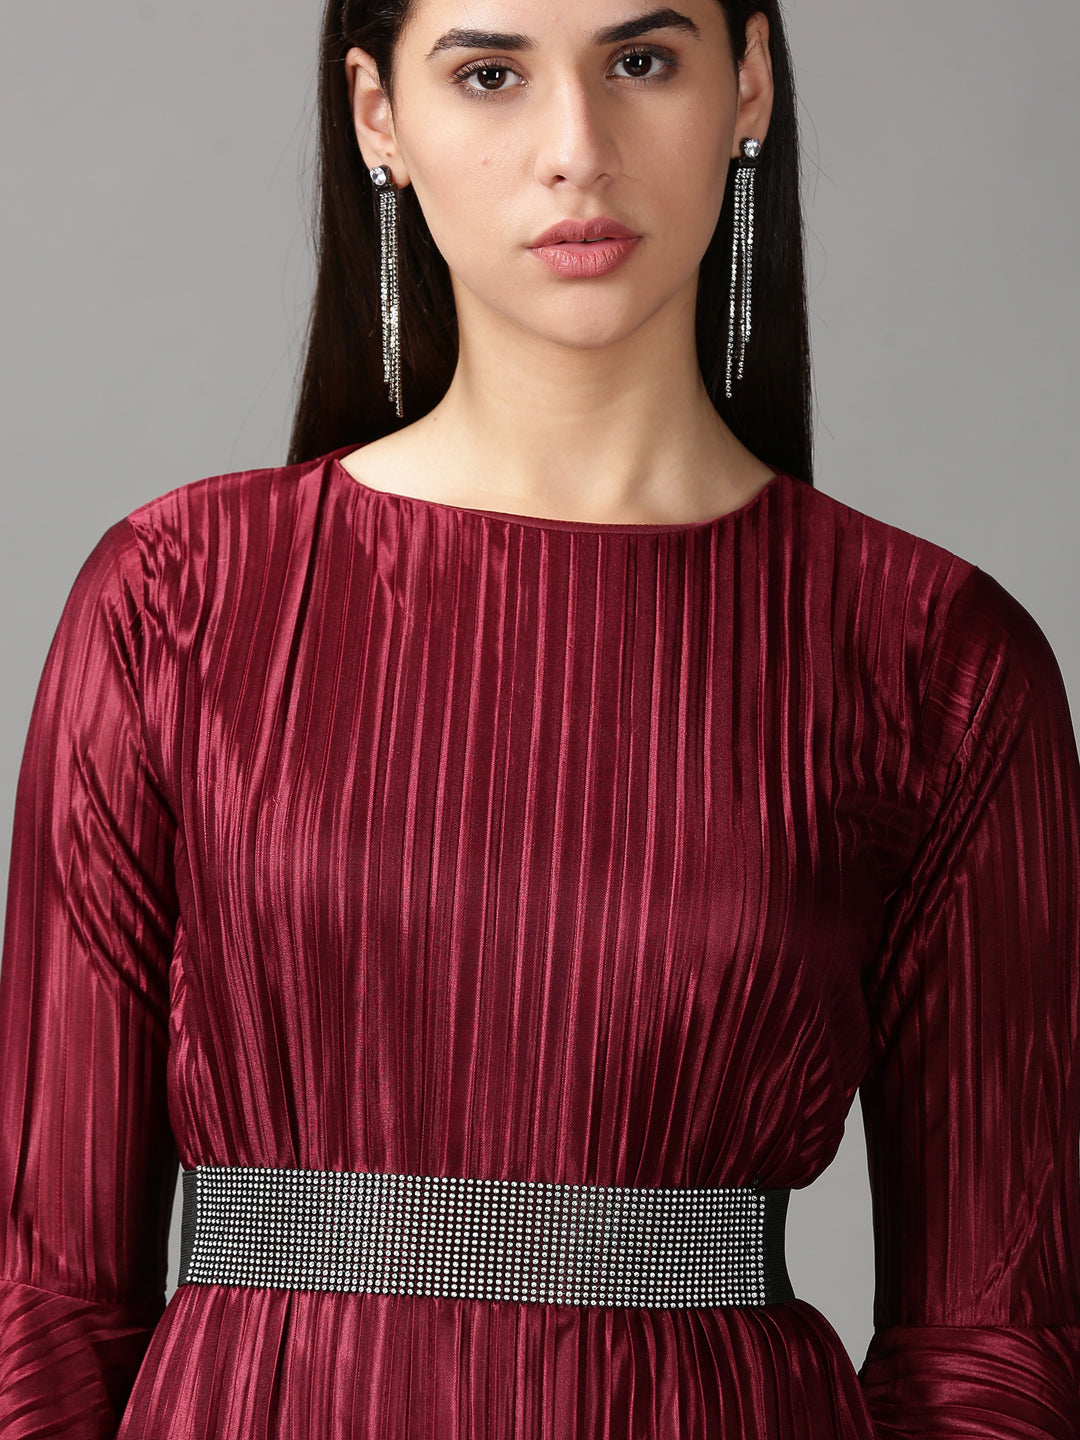 Women's Burgundy Solid A-Line Dress